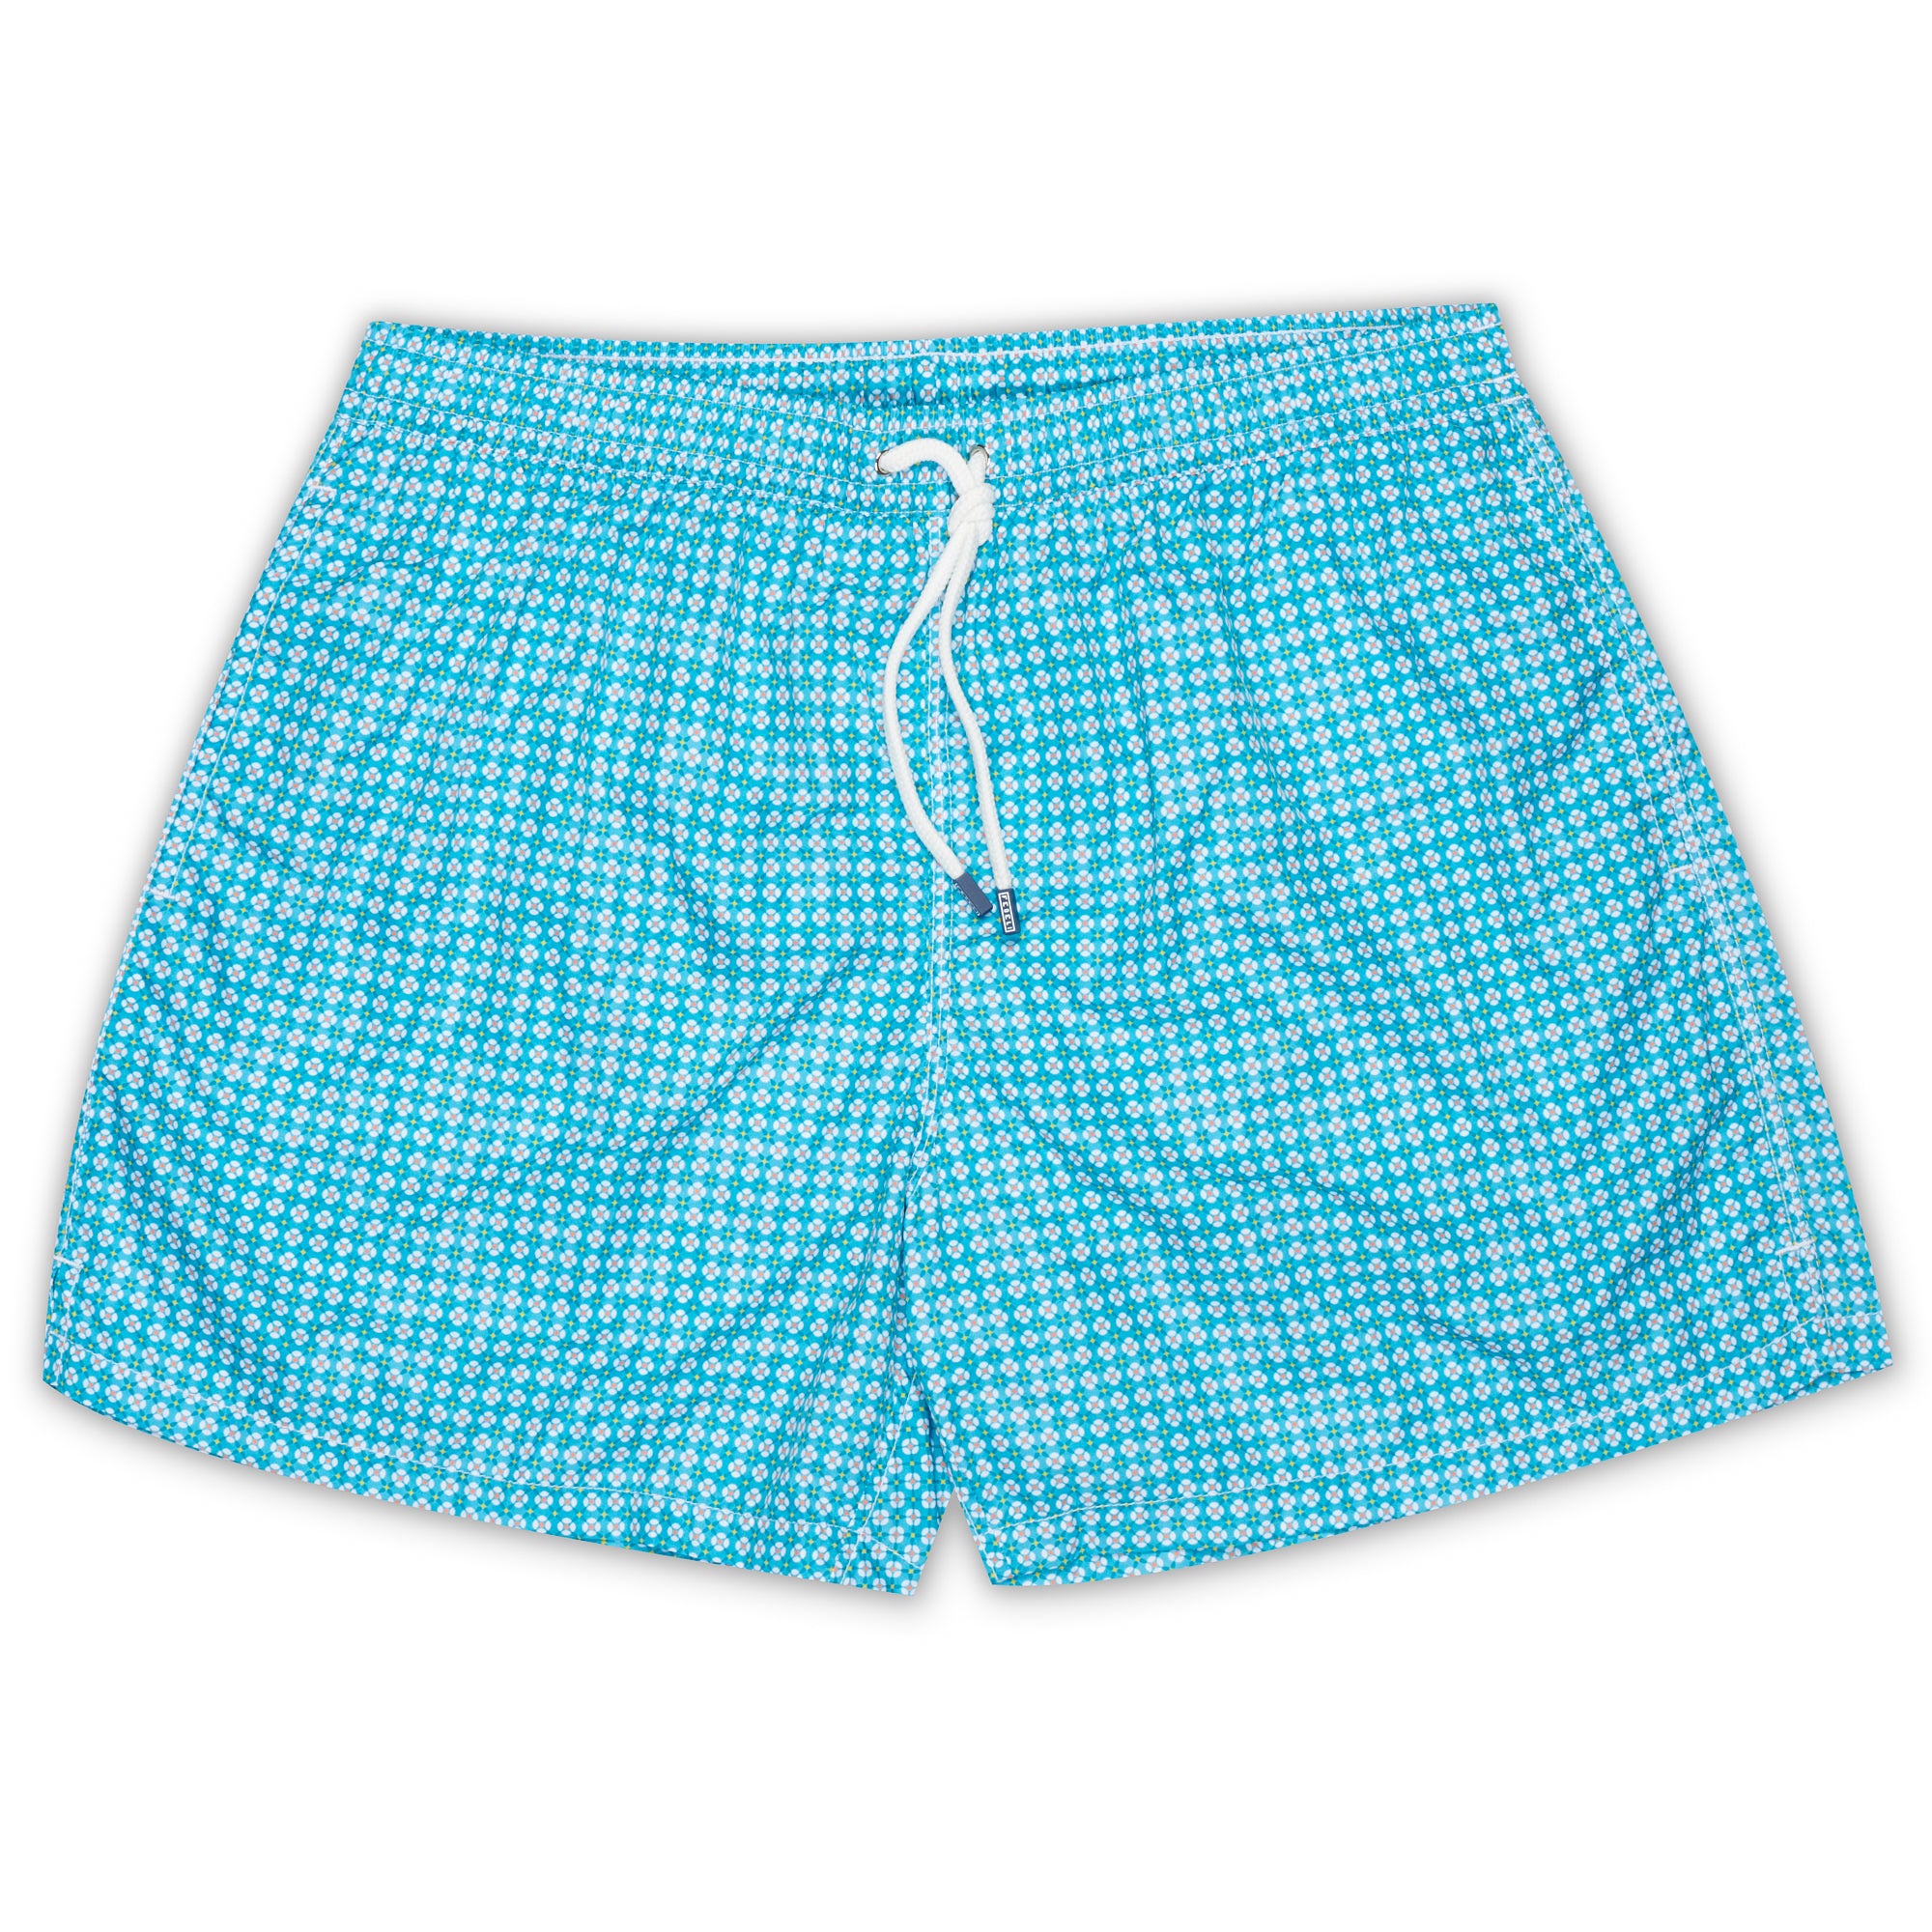 FEDELI Teal Blue Geometric Printed Madeira Airstop Swim Shorts Trunks NEW 2XL FEDELI